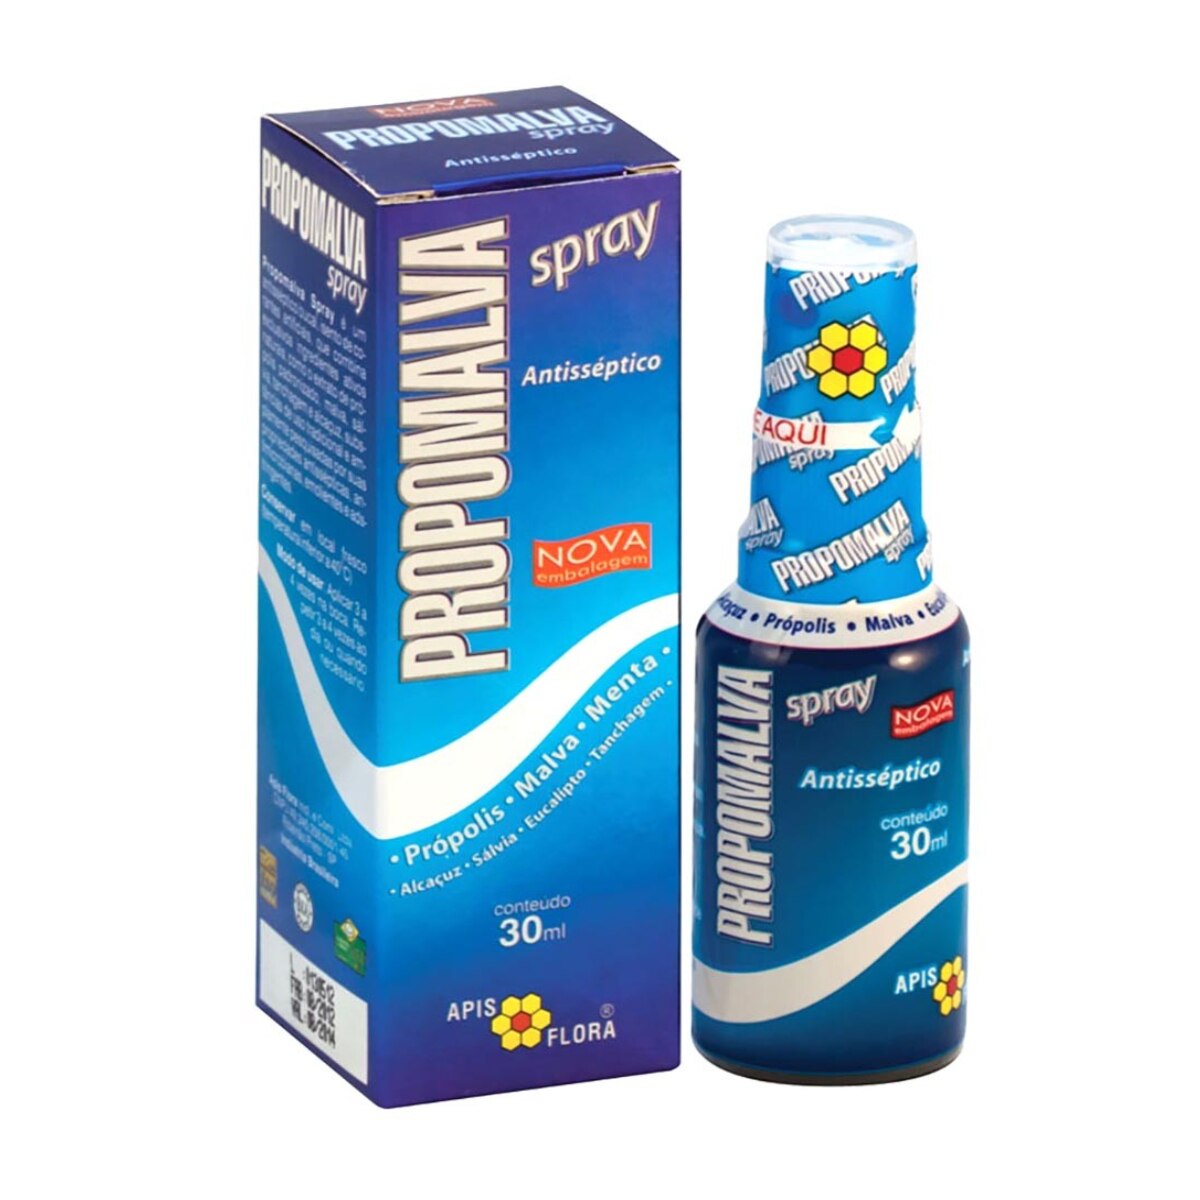 Propomalva Spray Antisseptico Apis Flora 30ml